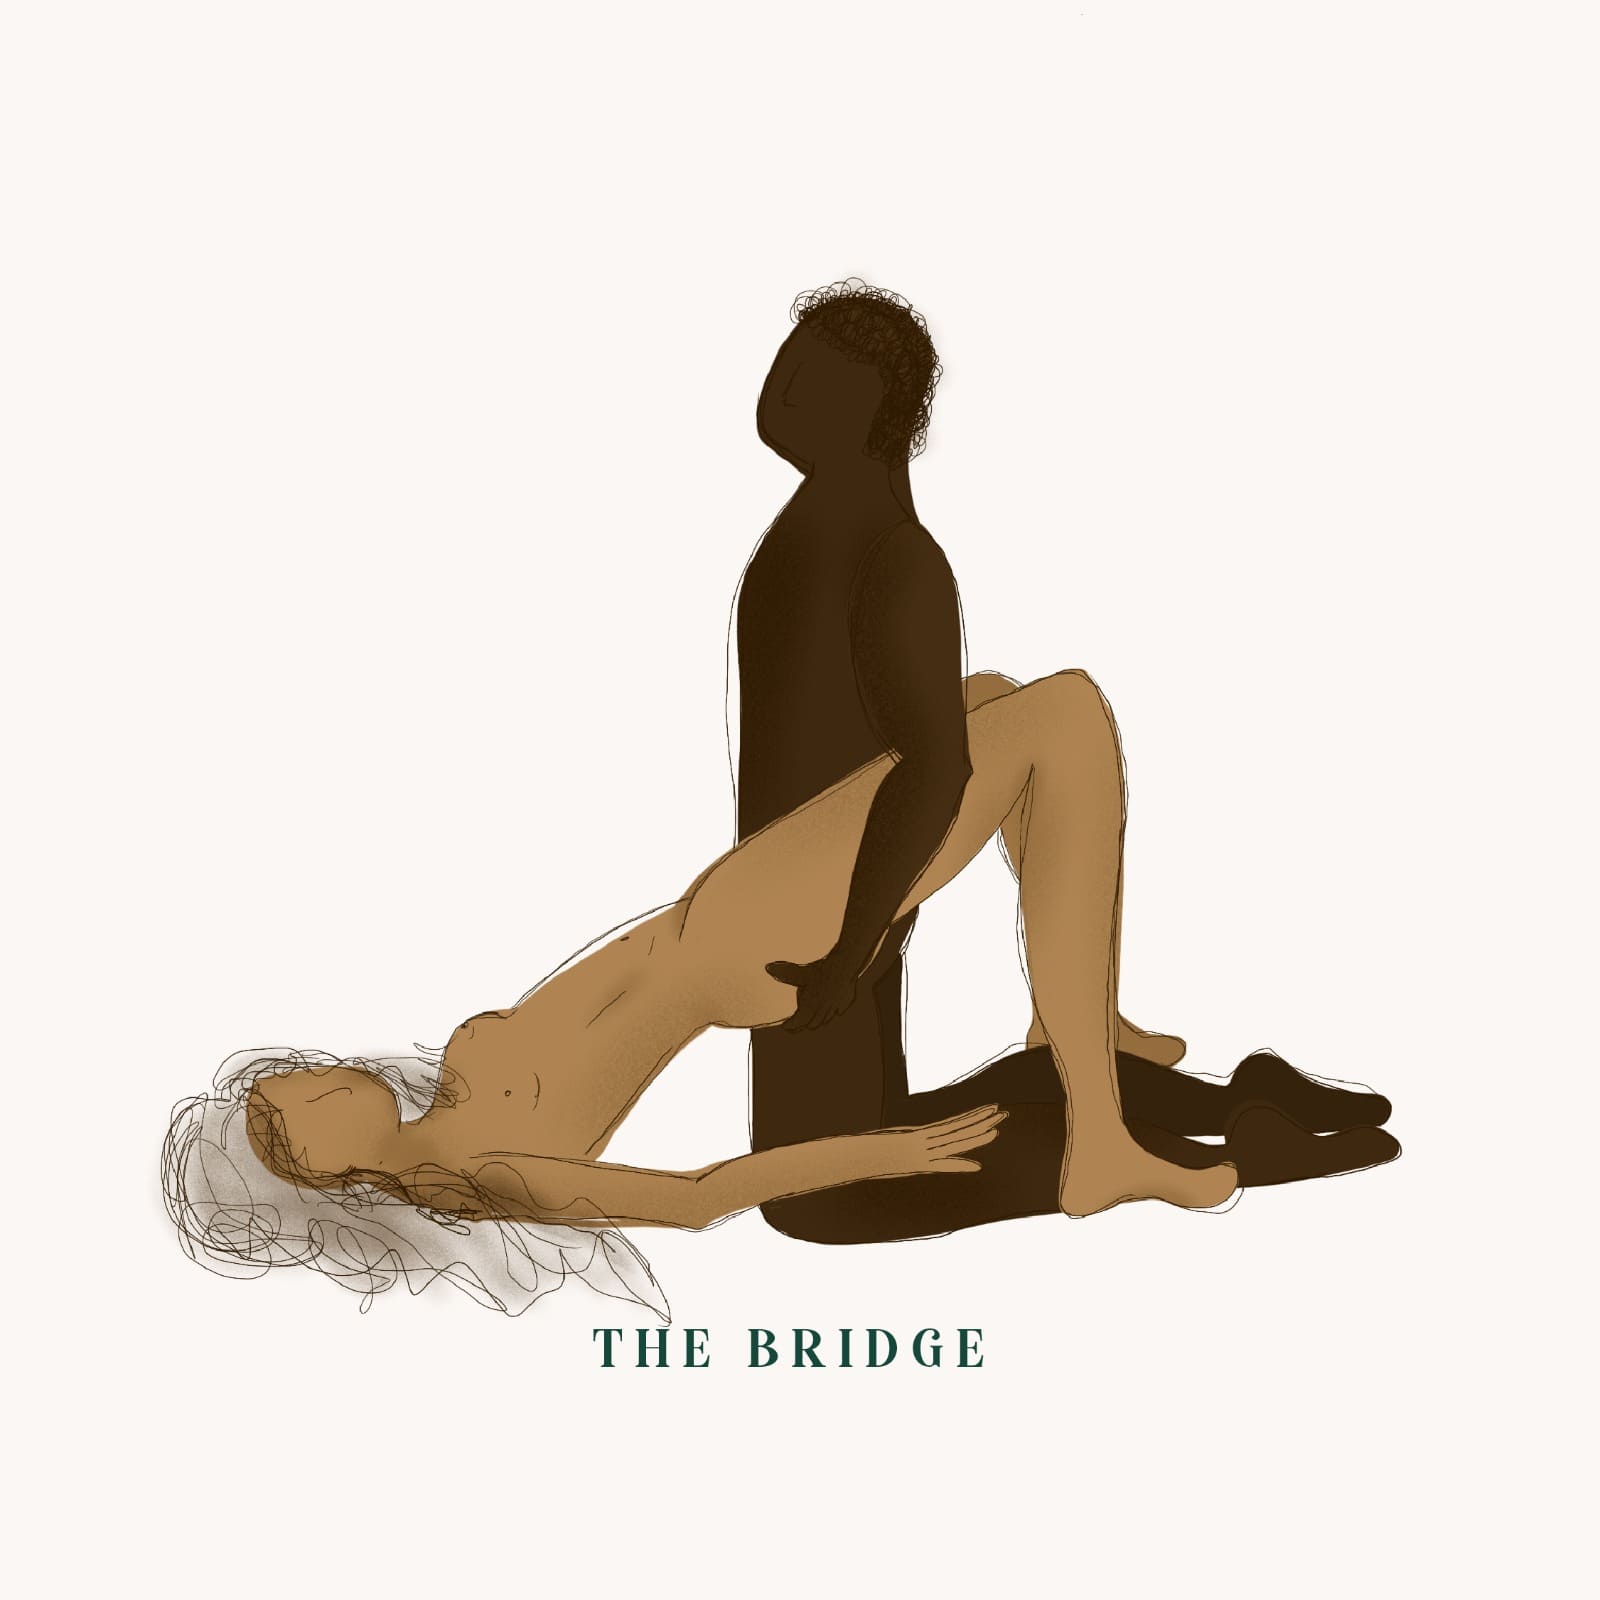 alt: Illustration of the bridge sex position